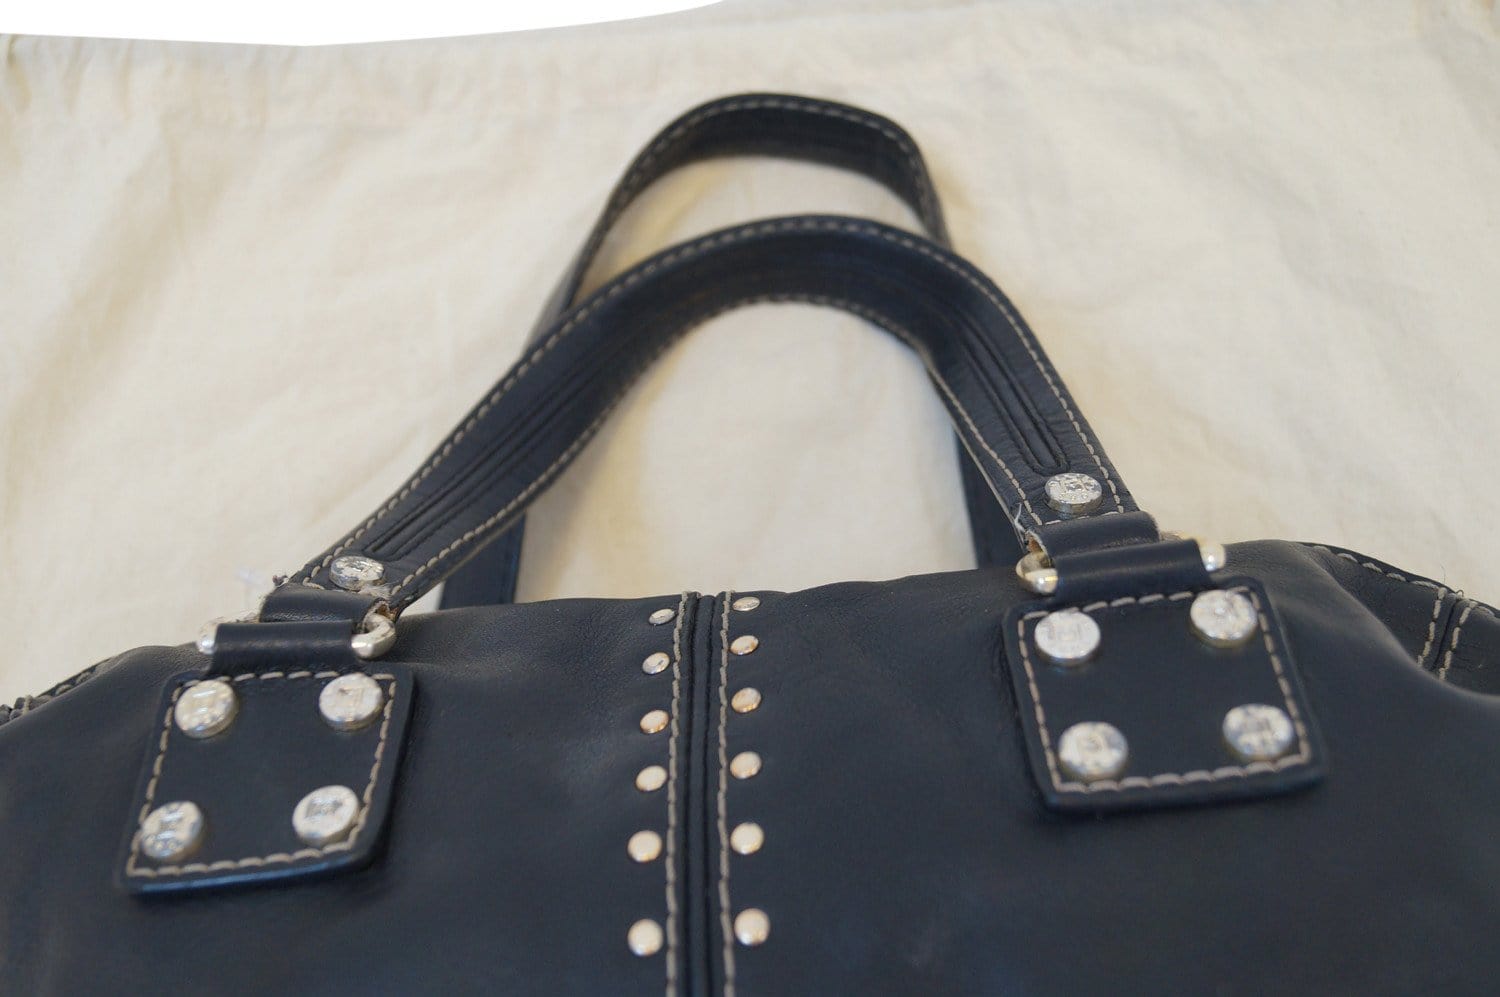 Michael kors black leather purse  Black leather purse, Leather